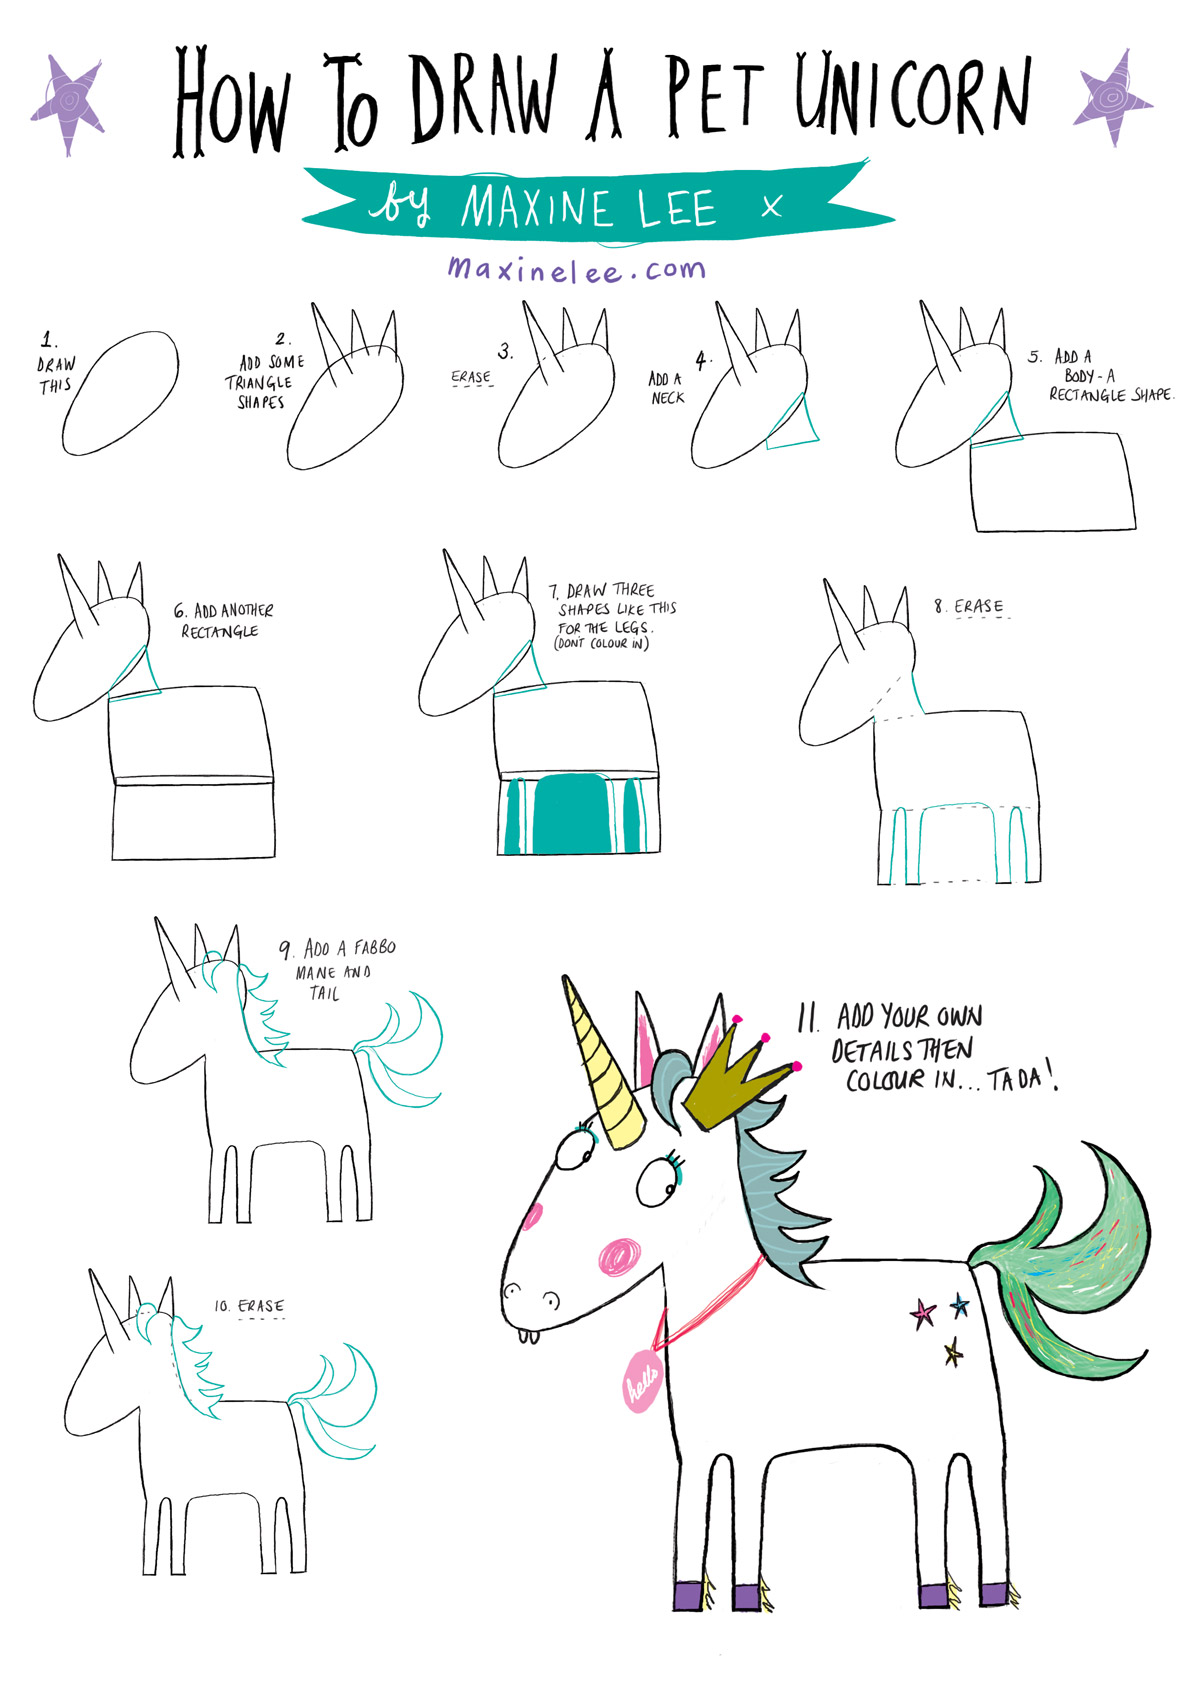 How To Draw a Unicorn